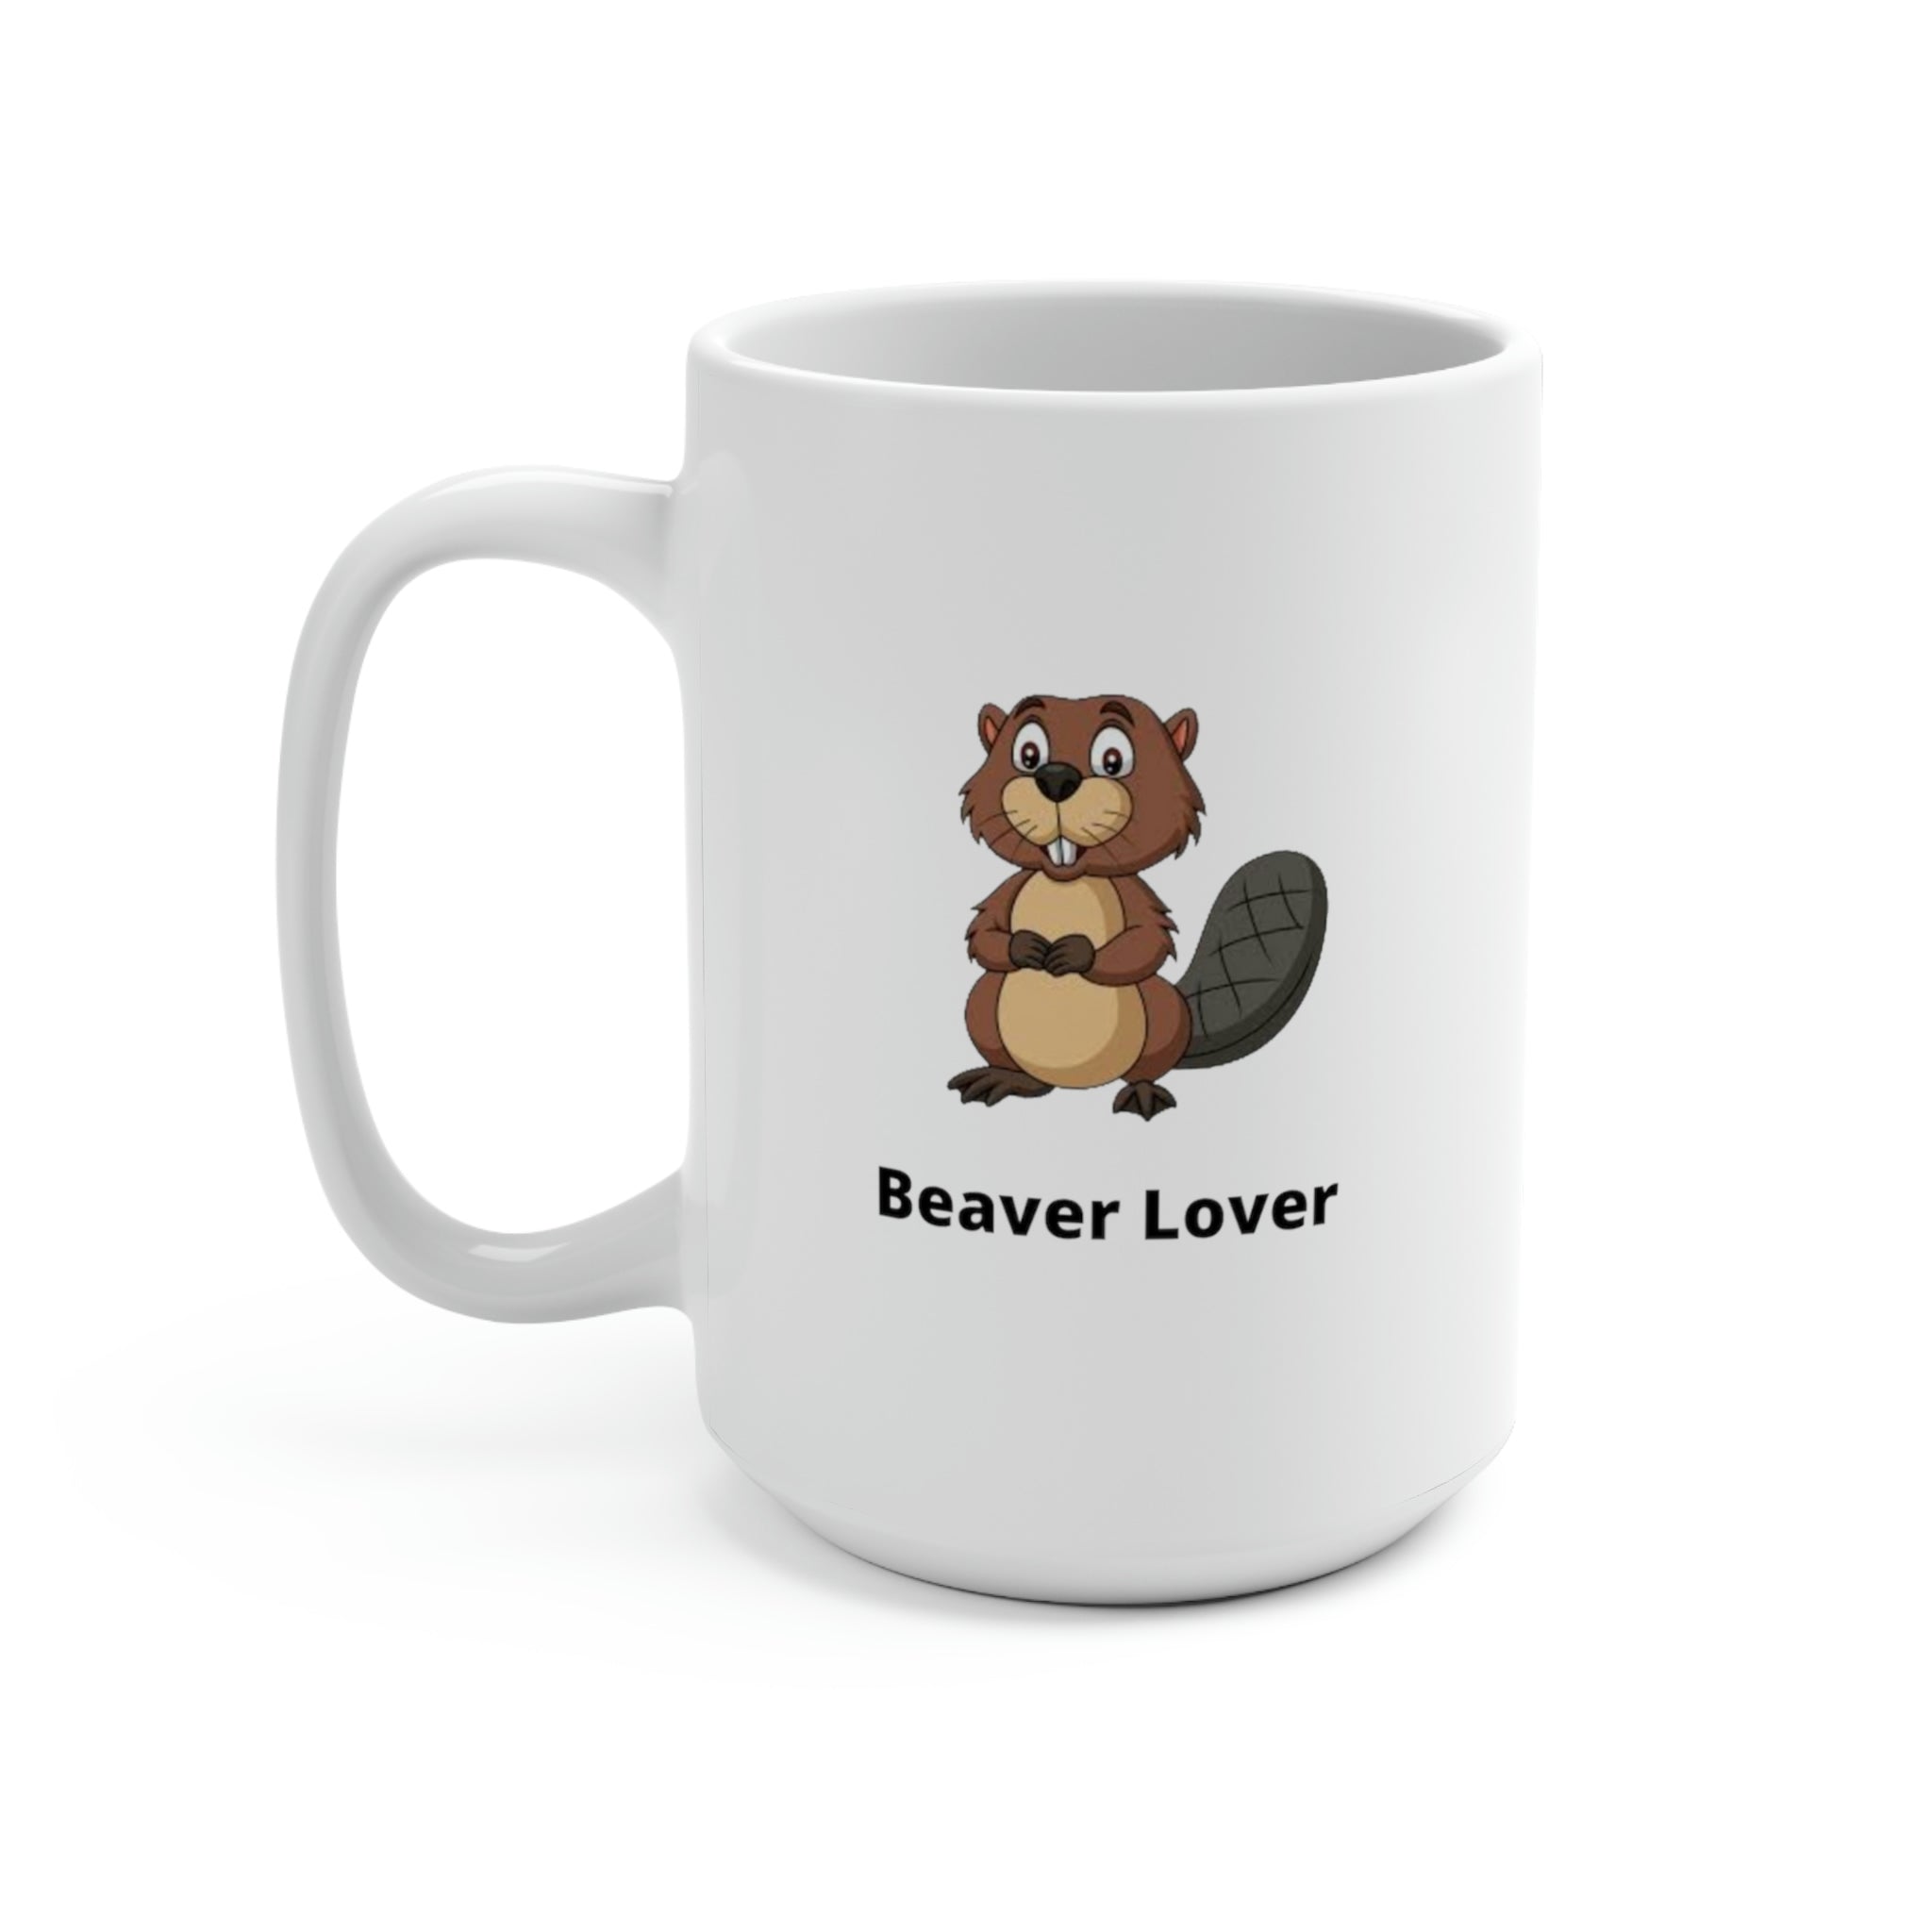 BEAVER LOVER - Novelty Coffee Mug - 15oz